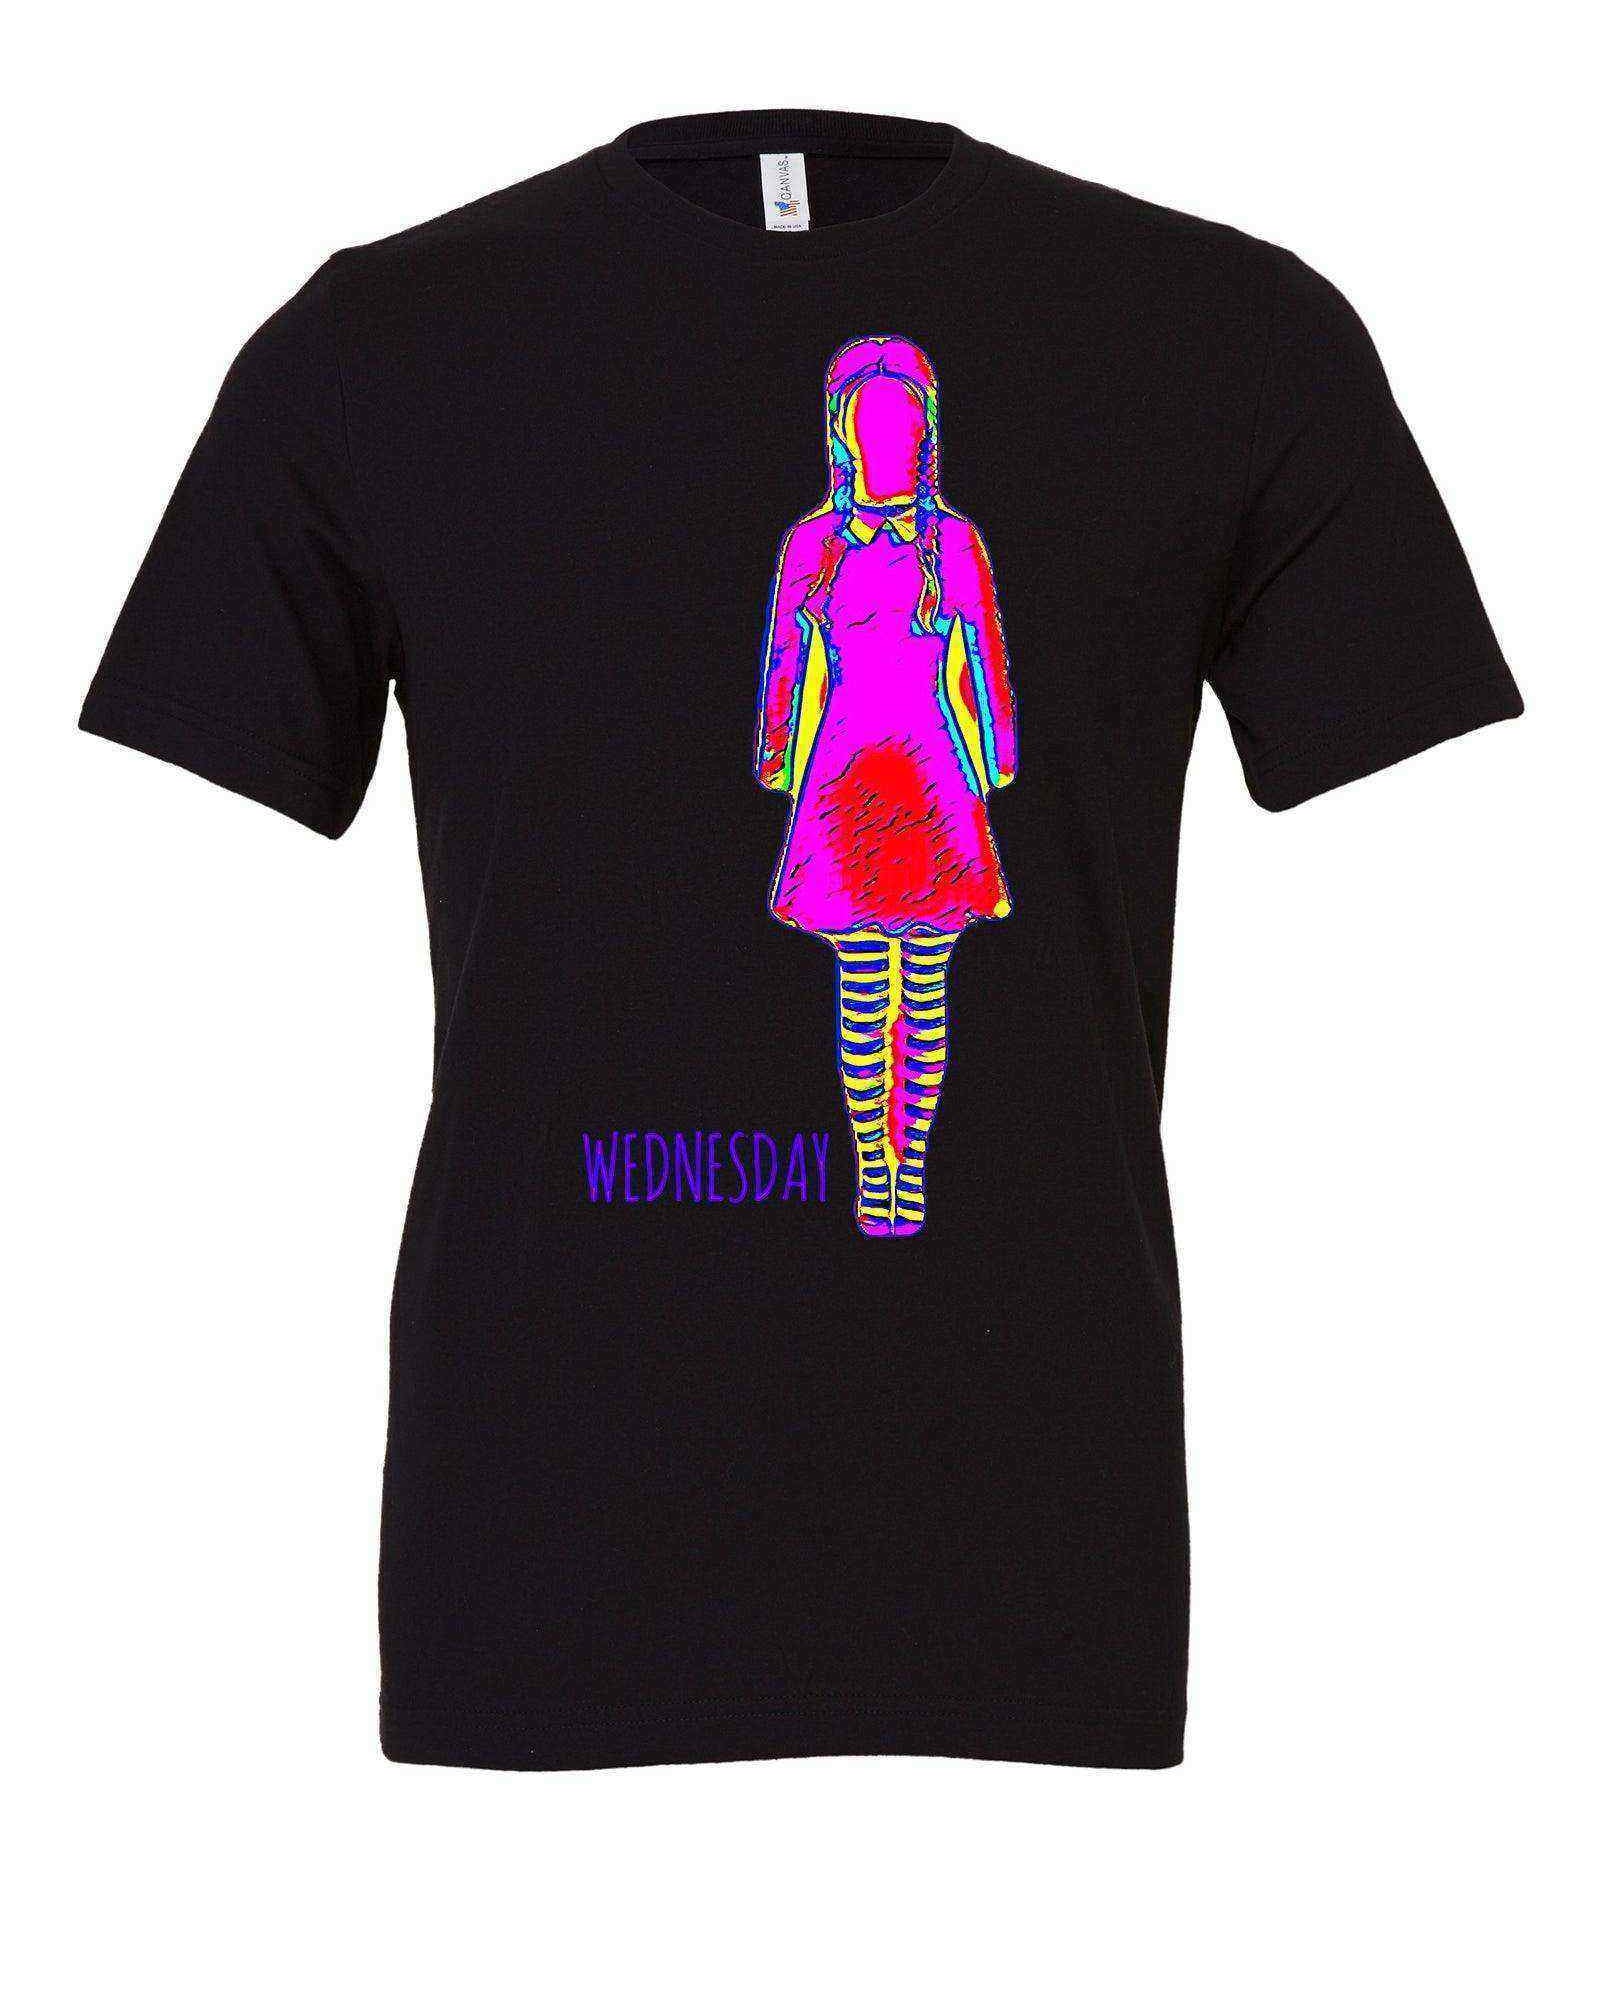 Neon Wednesday Shirt | Wednesday Shirts | Addams Shirt - Dylan's Tees